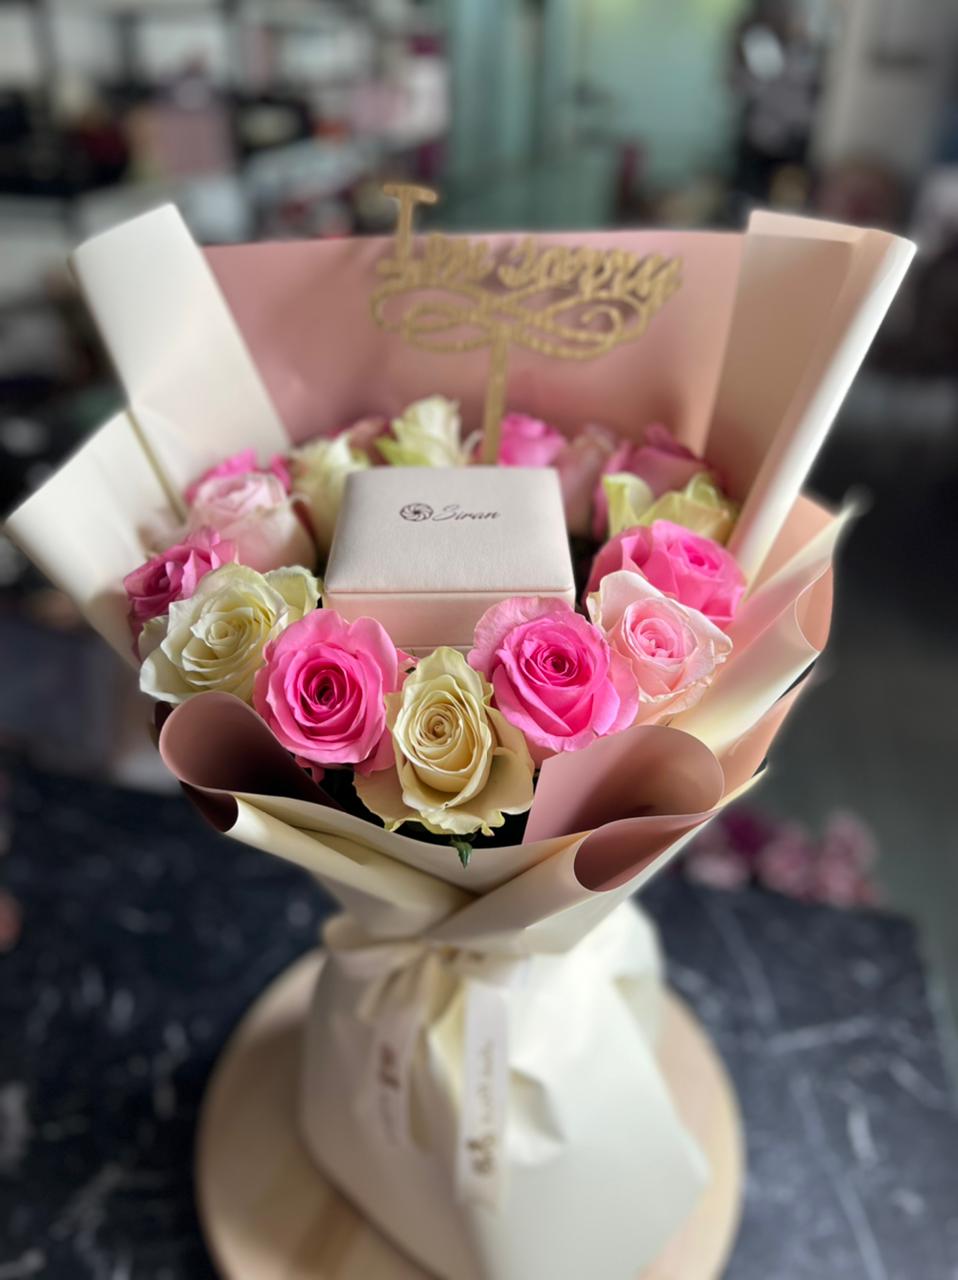 Flower Bouquet without necklace - Bae3at Elward flower shop 